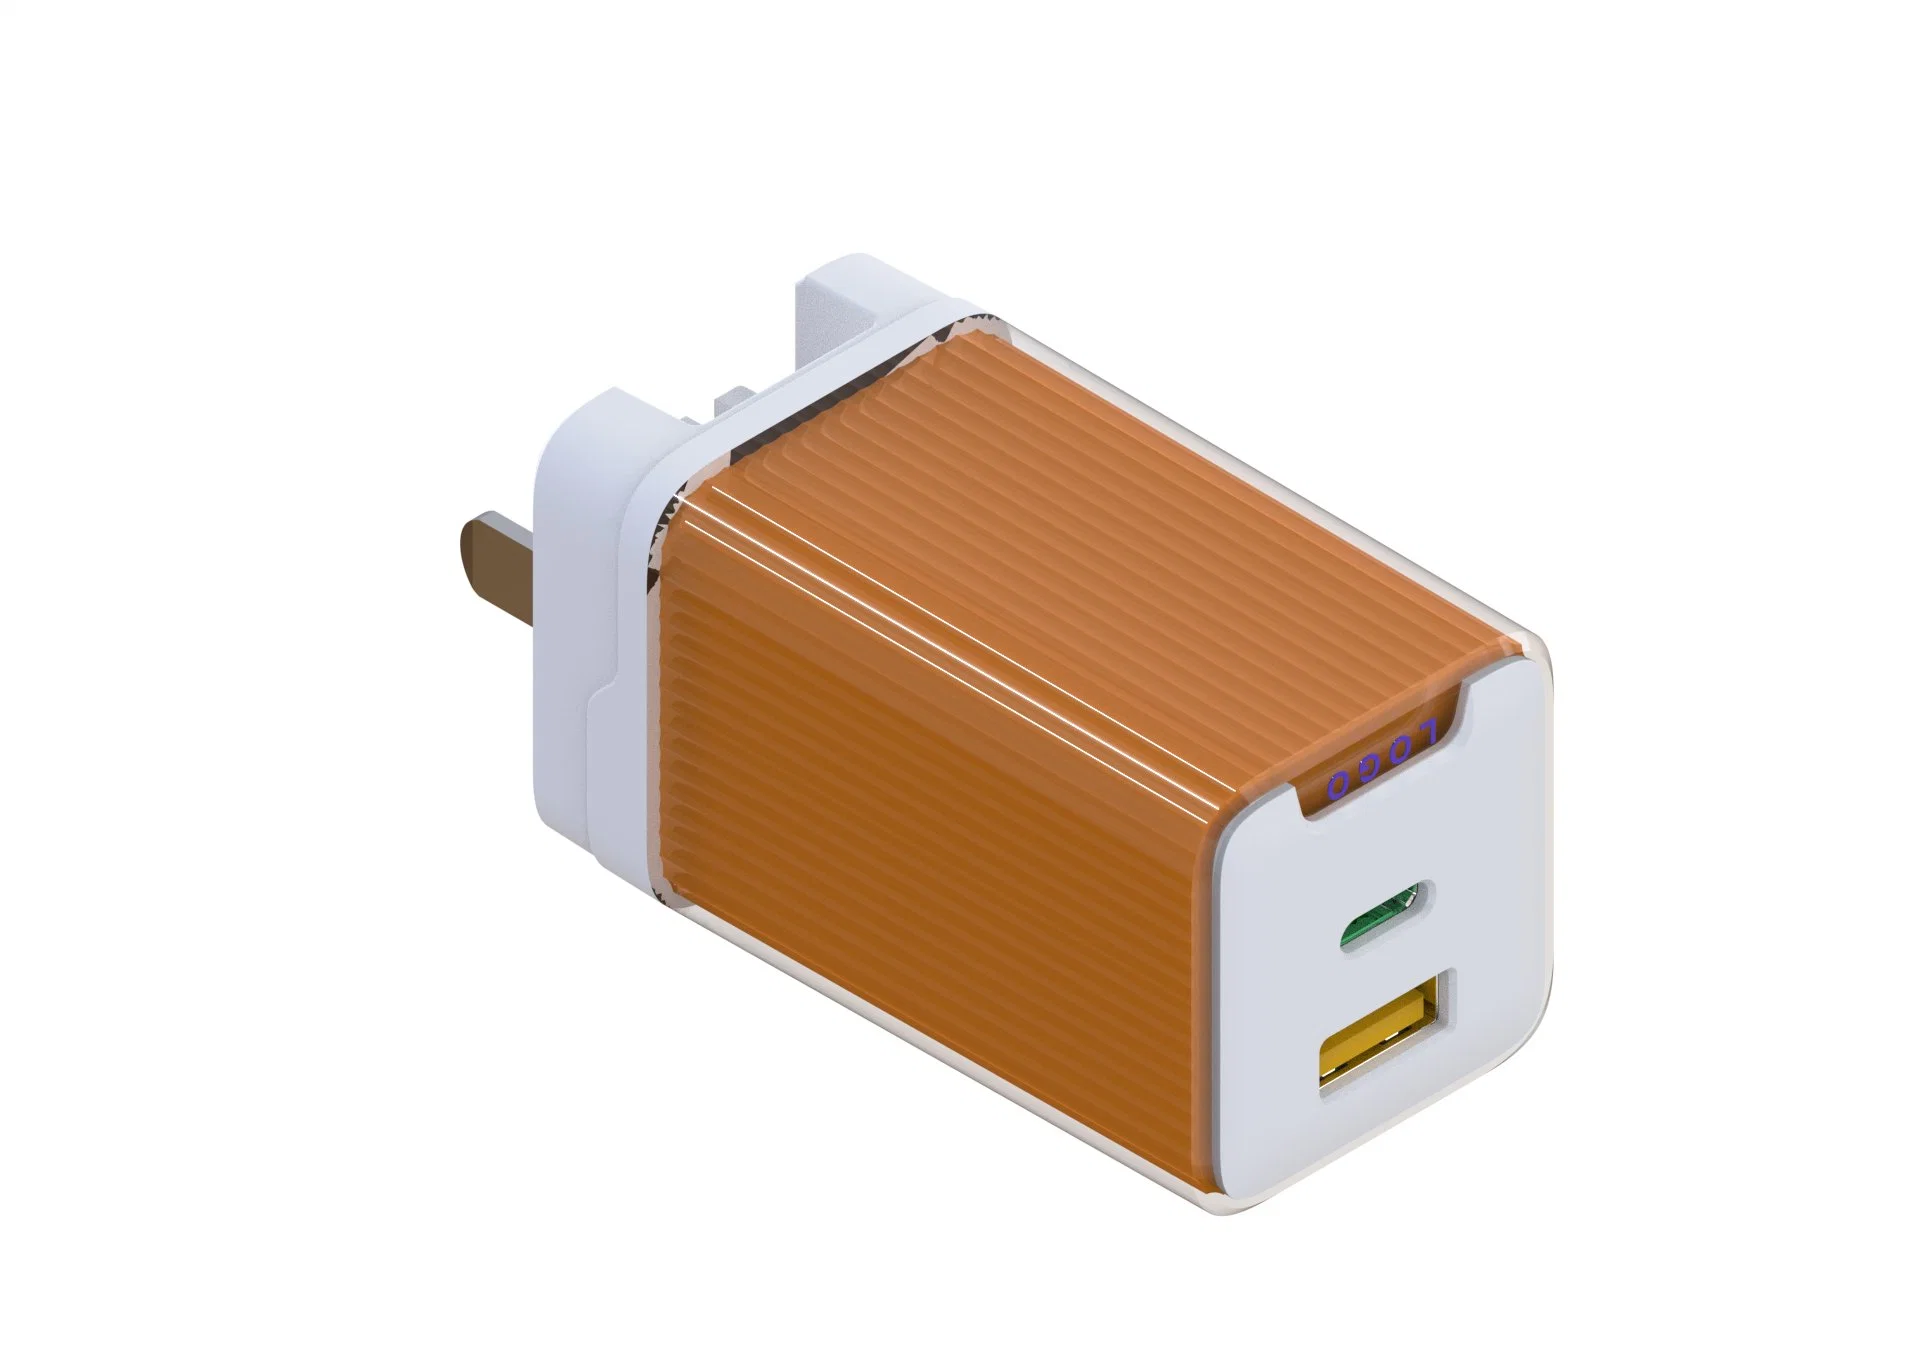 45W salida de alta potencia a+C Cargador de pared USB Smarth Phone Cargador de teléfono móvil Cargador rápido de viaje para teléfono móvil